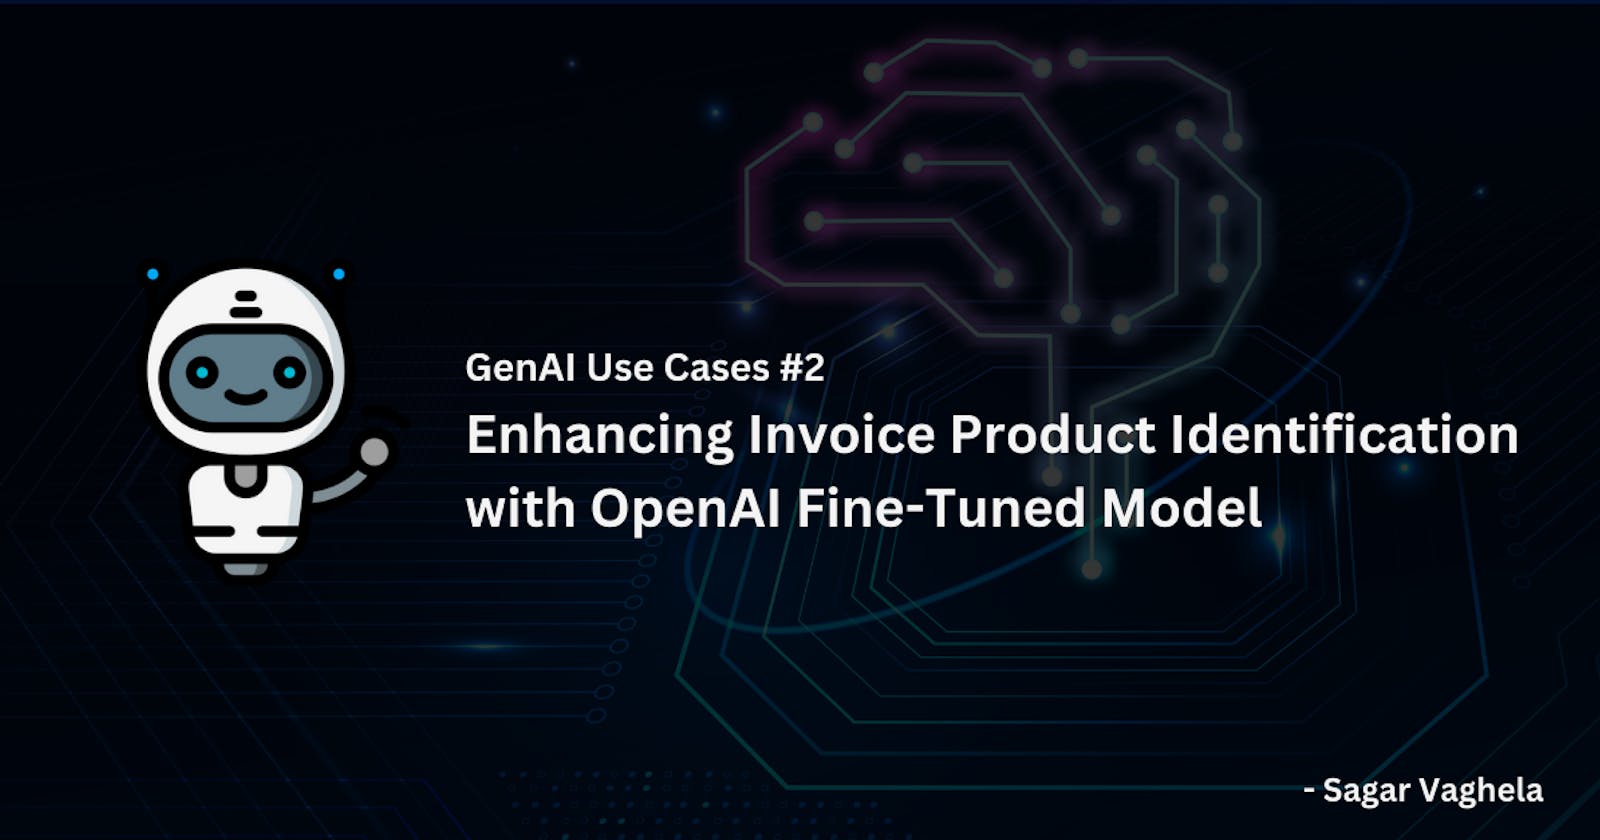 GenAI Use Cases #2: Enhancing Invoice Product Identification with OpenAI Fine-Tuned Model